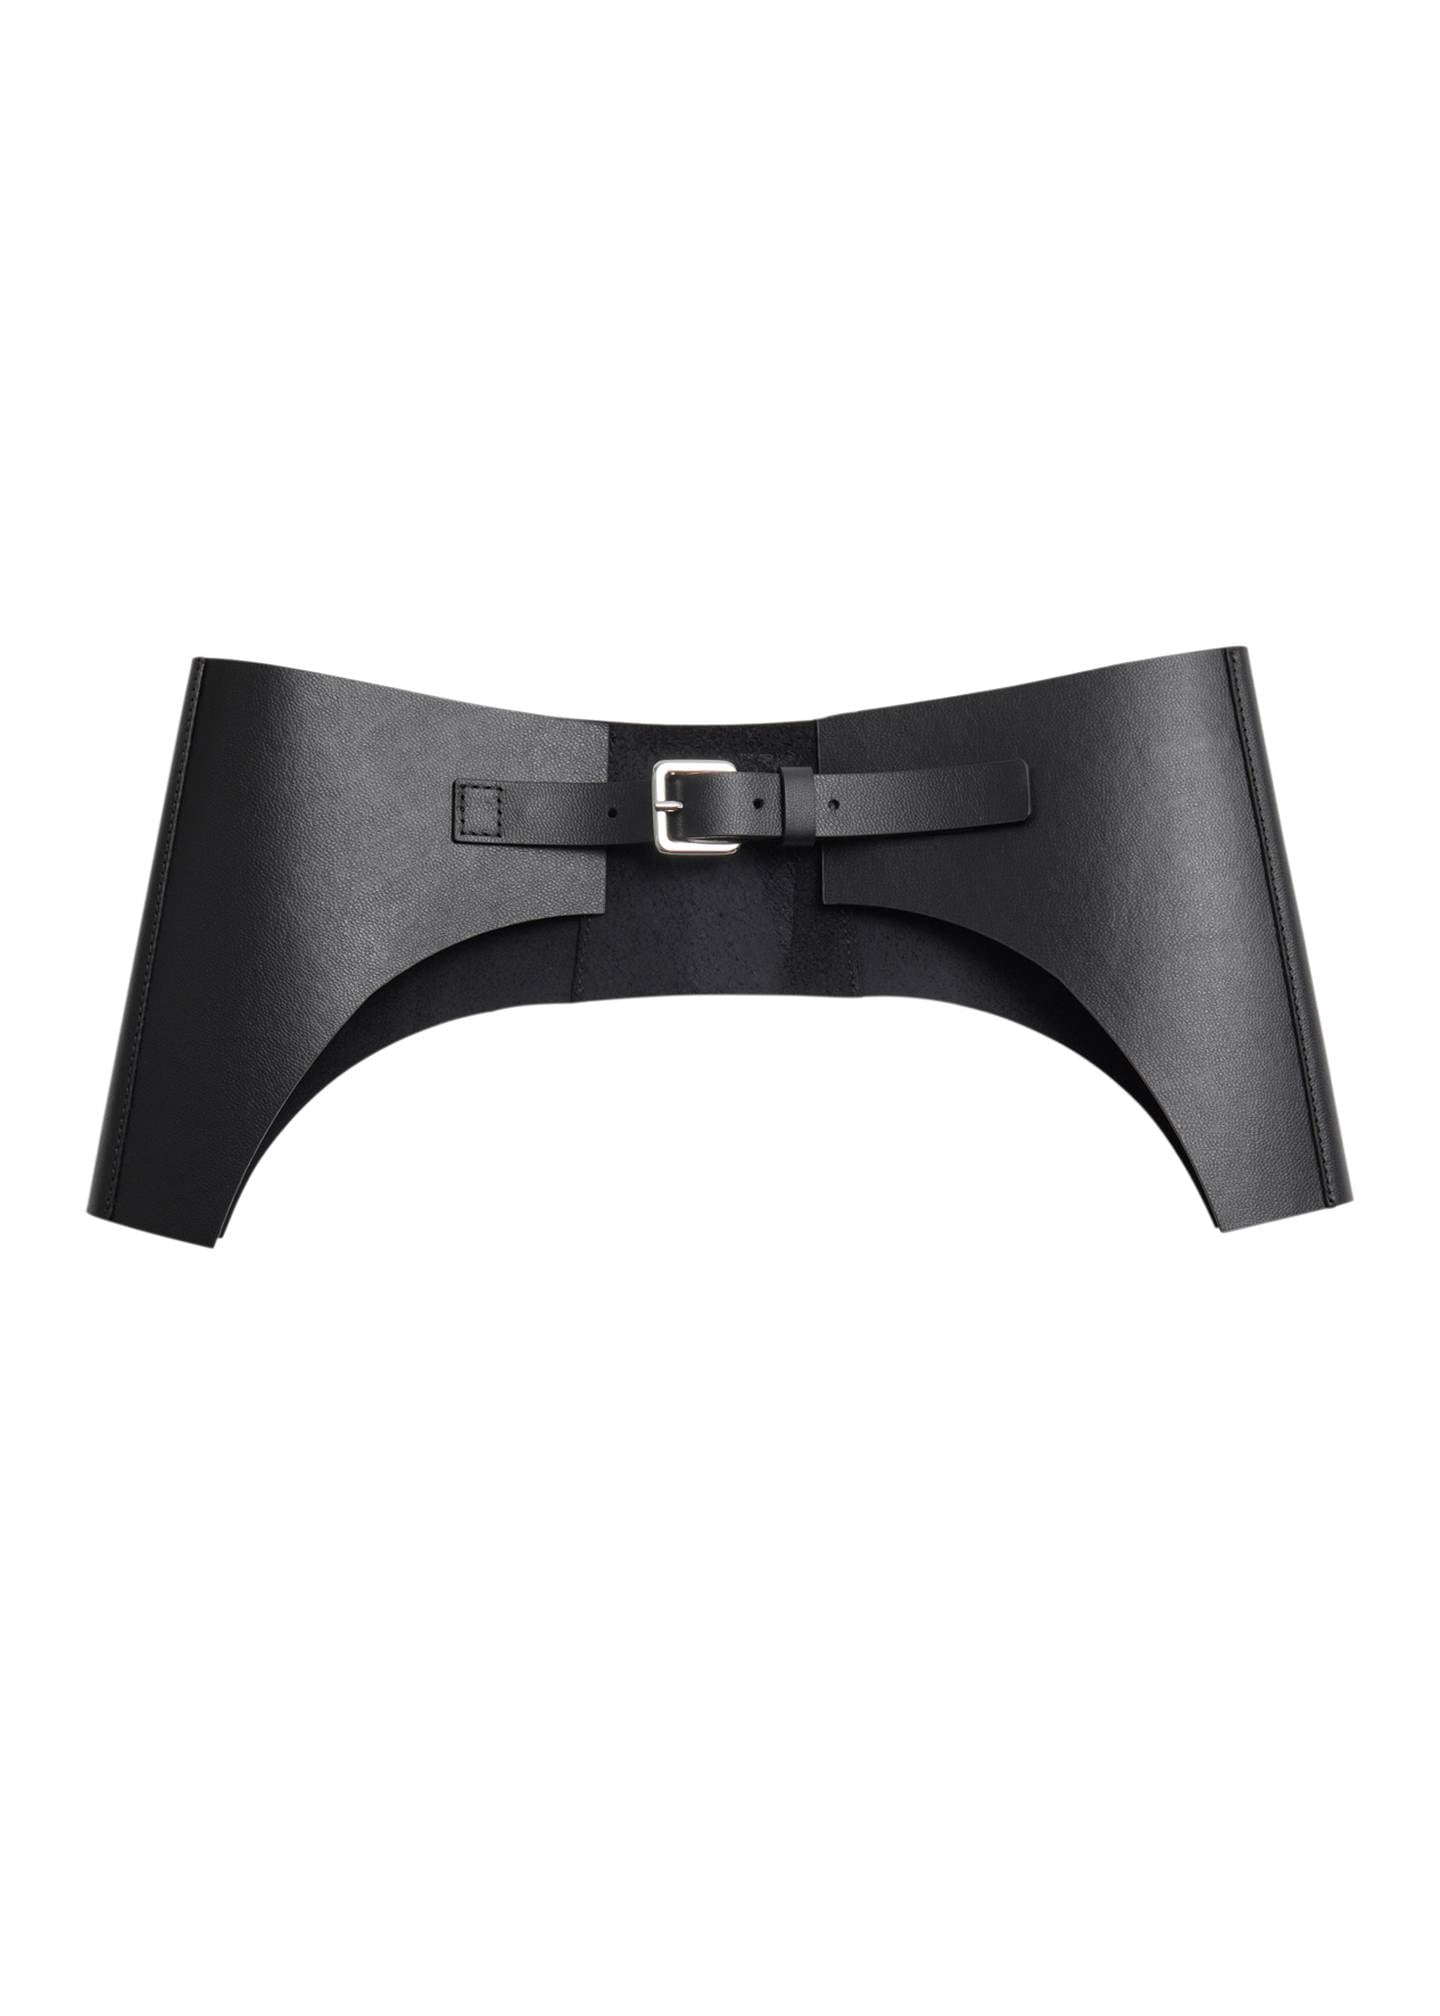 Black leather belt €49, & Other Stories